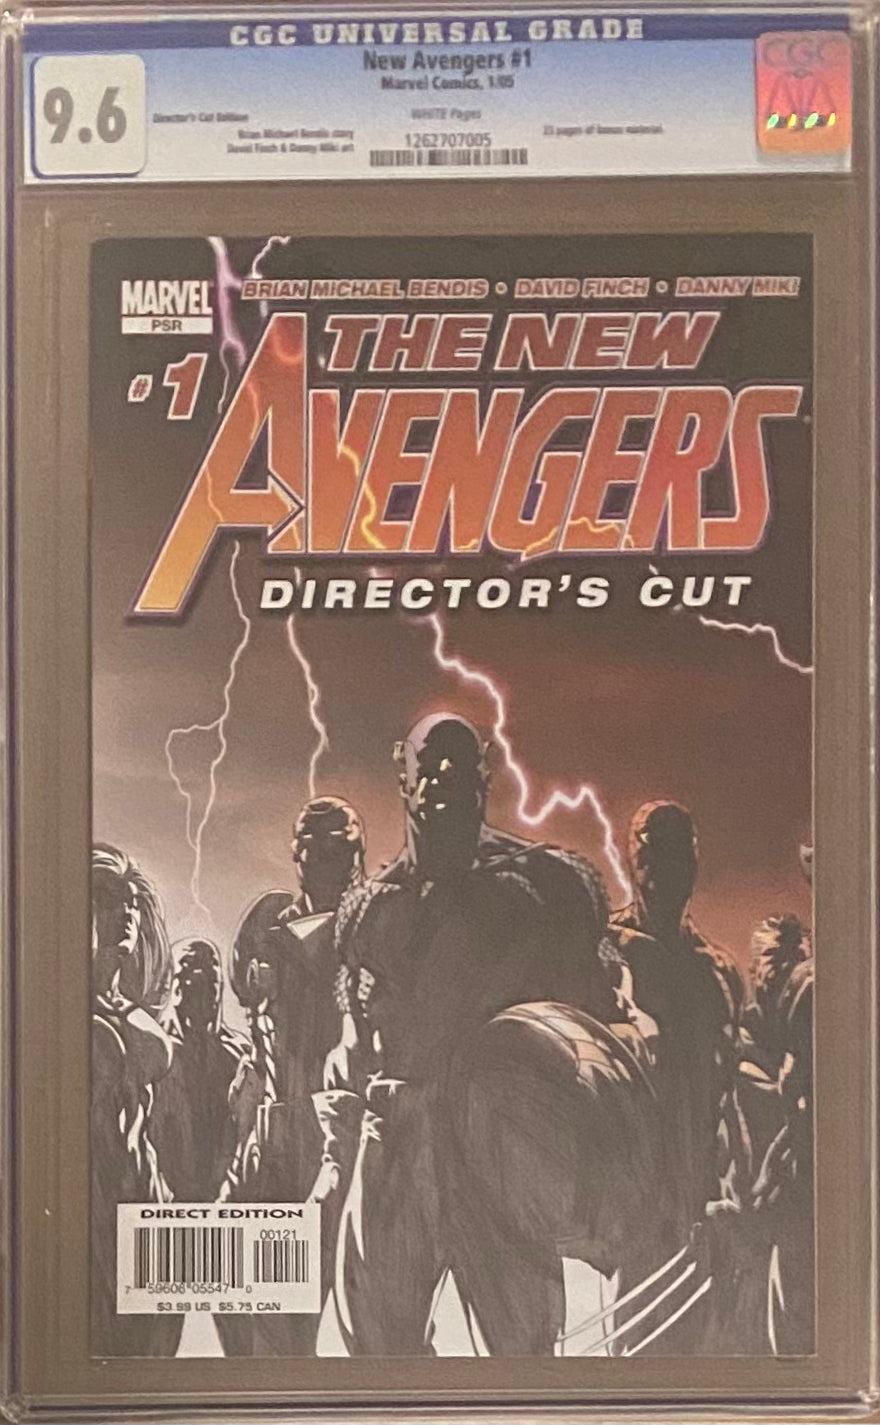 New Avengers #1 Director's Cut CGC 9.6